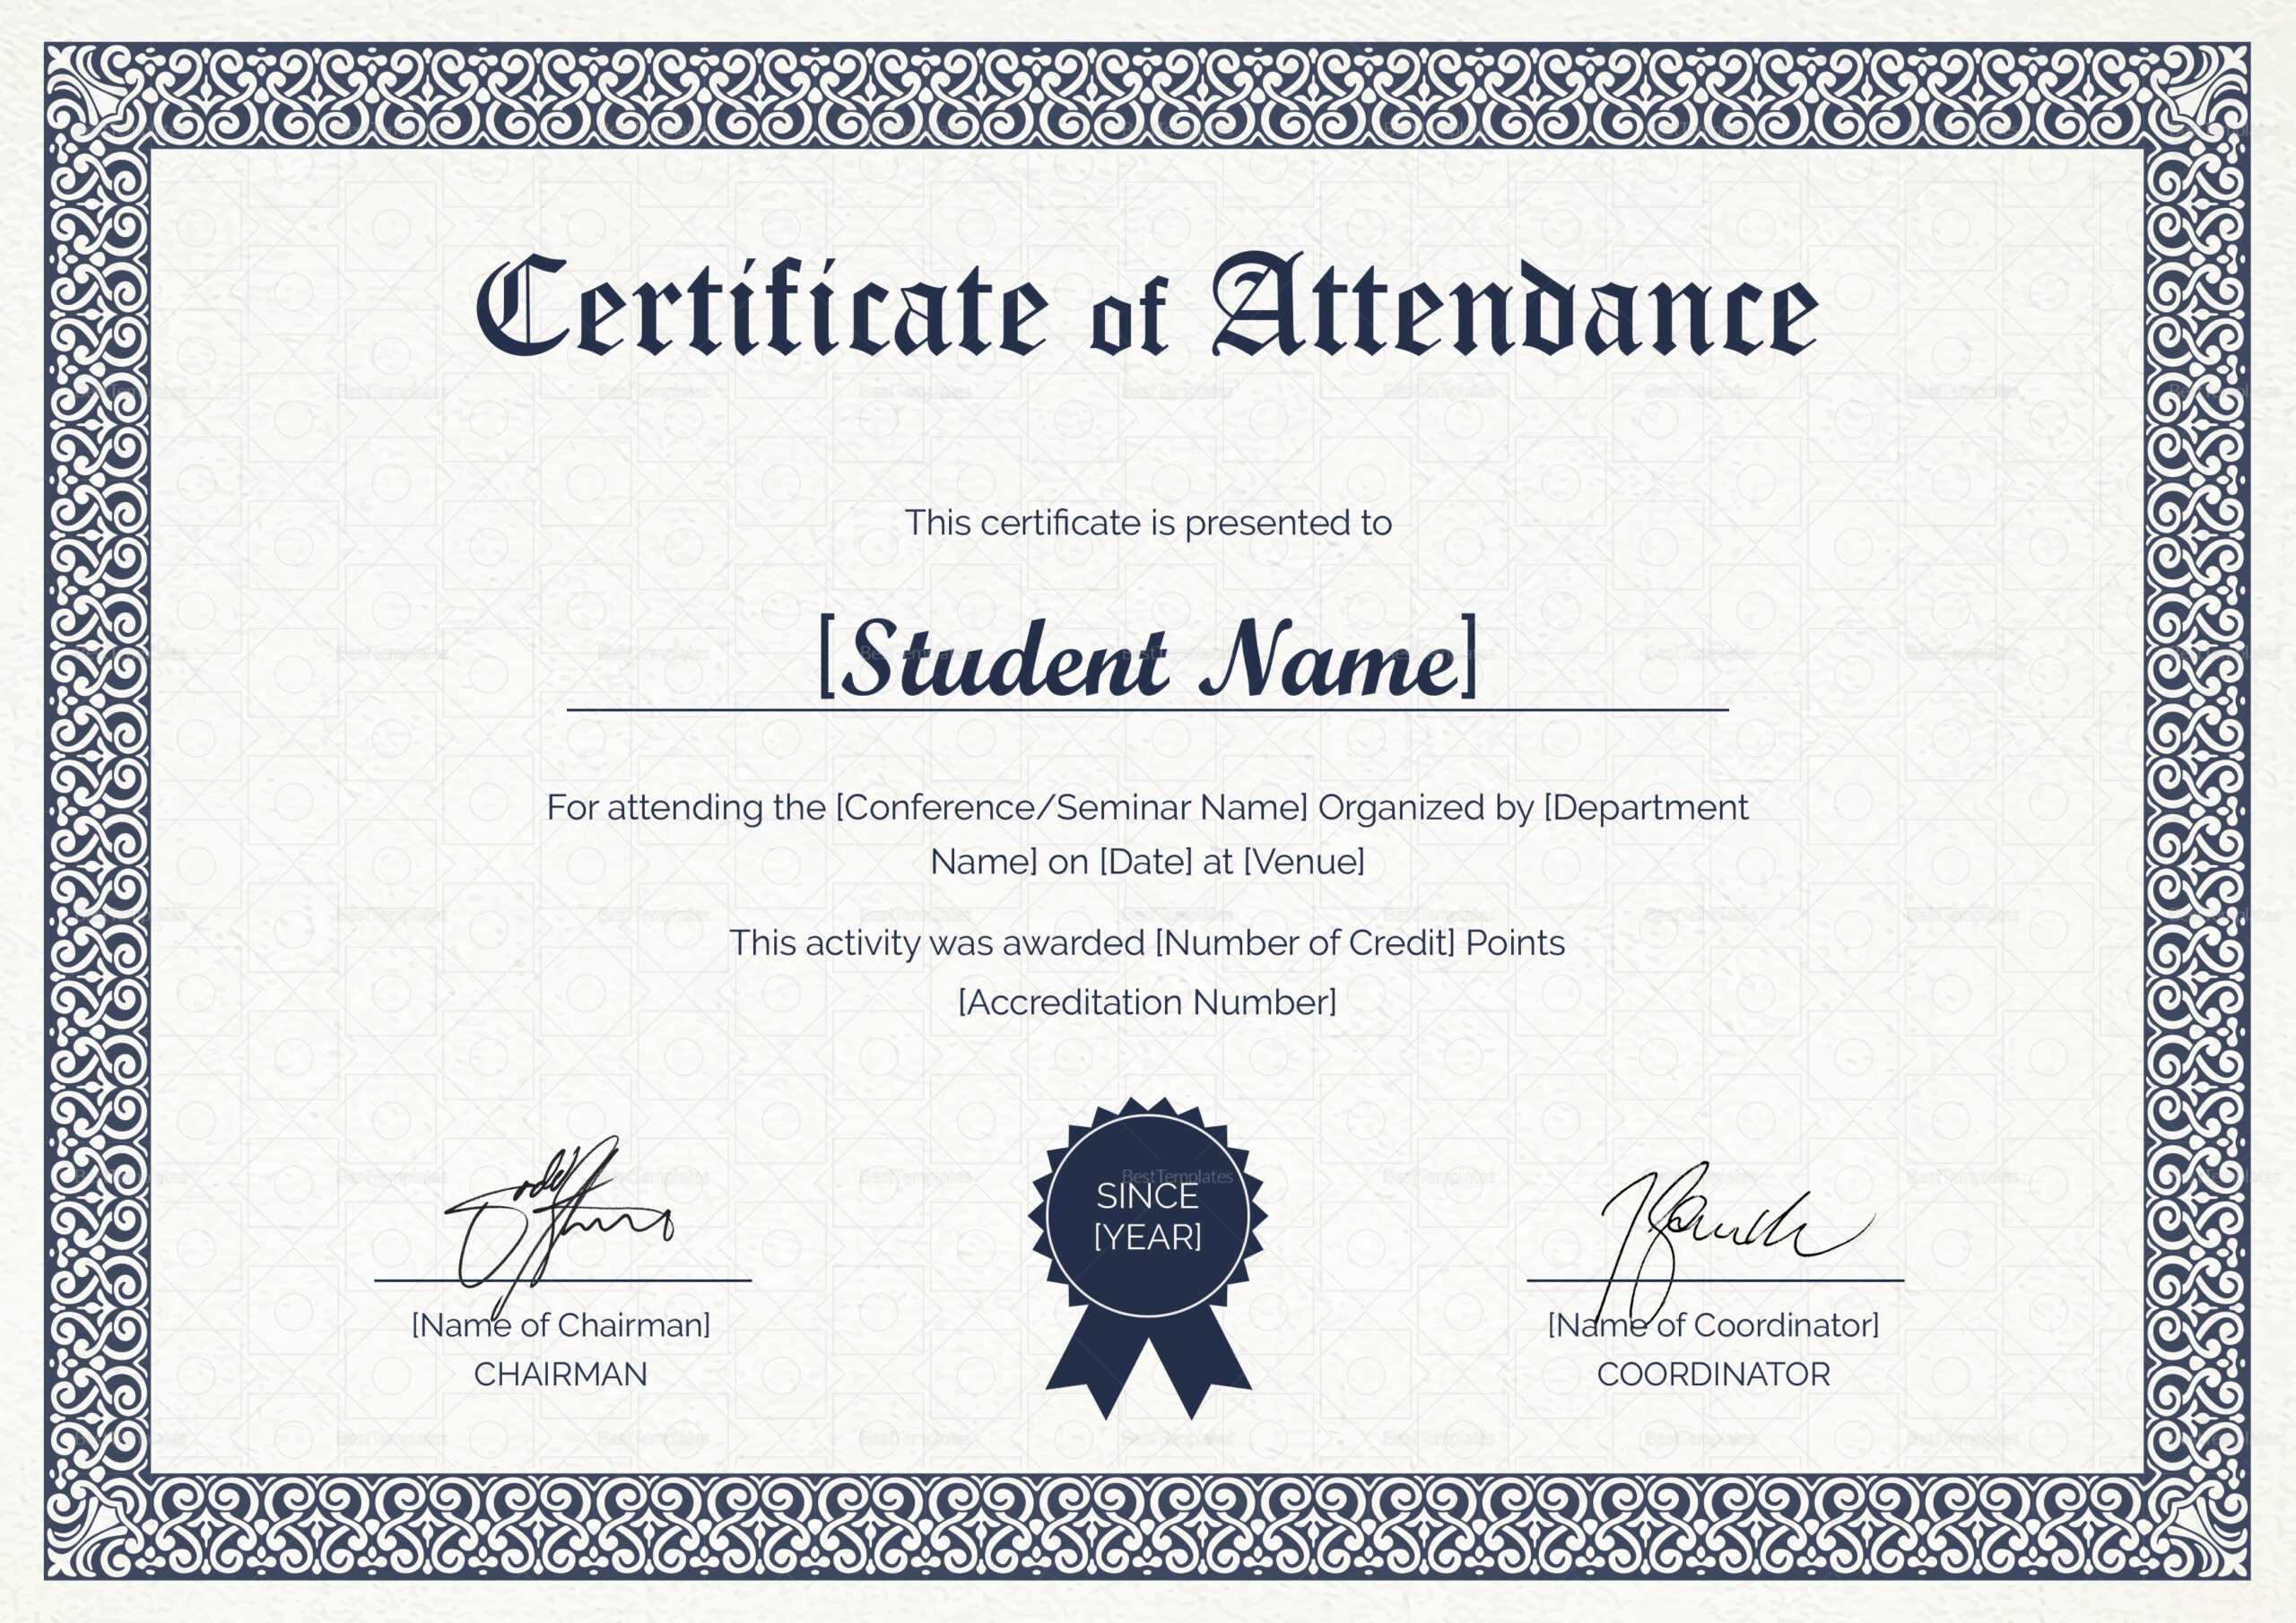 Students Attendance Certificate Template Throughout Certificate Of Attendance Conference Template